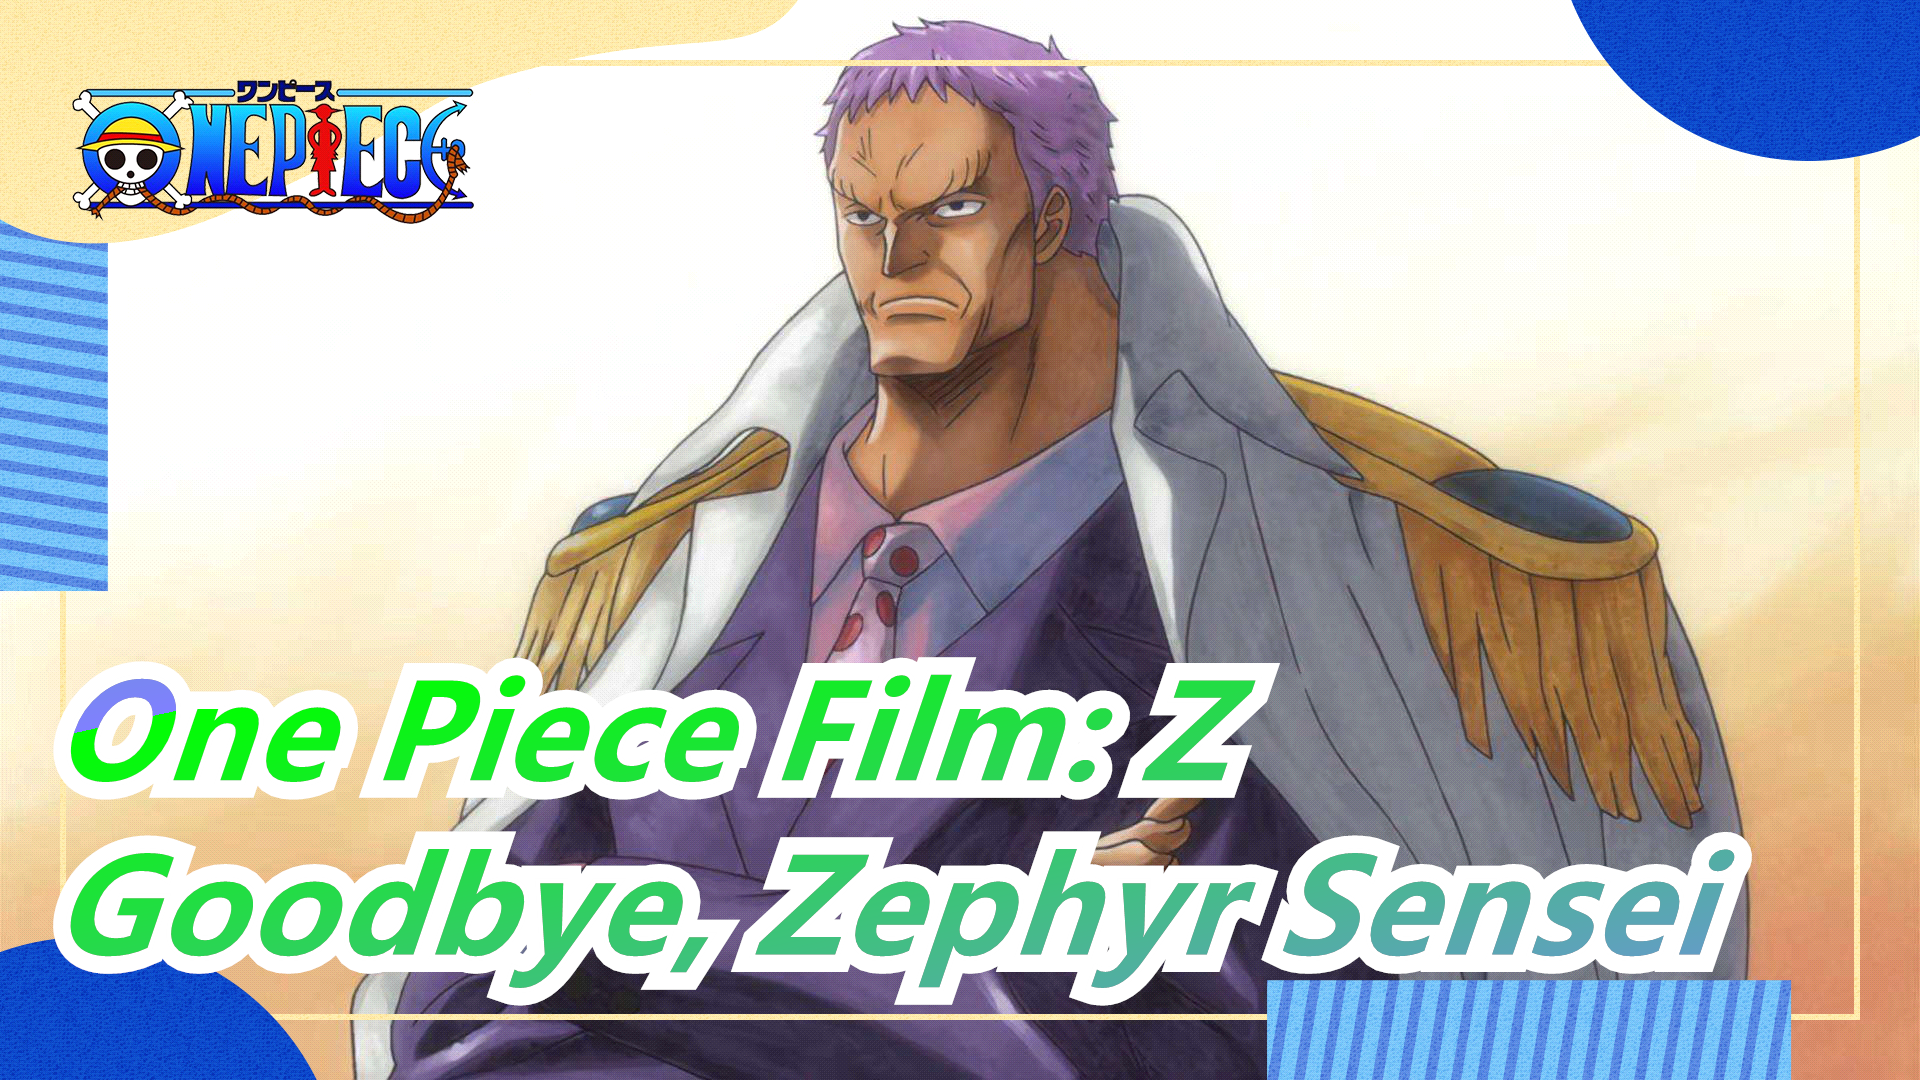 One Piece OST Ocean Guide - One Piece Film: Z - Zephyr - BiliBili